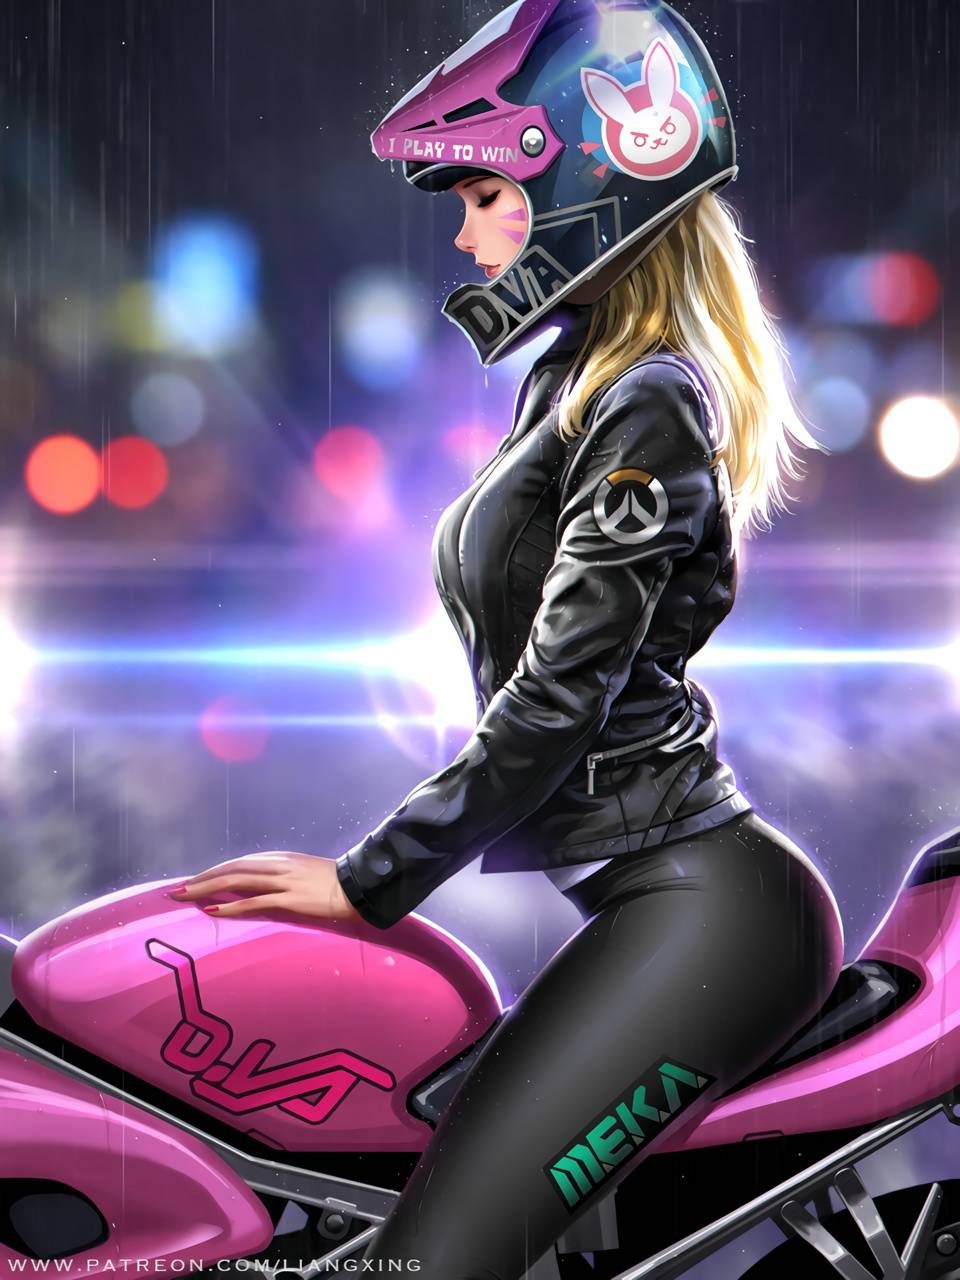 Girl Motorcycle wallpaper